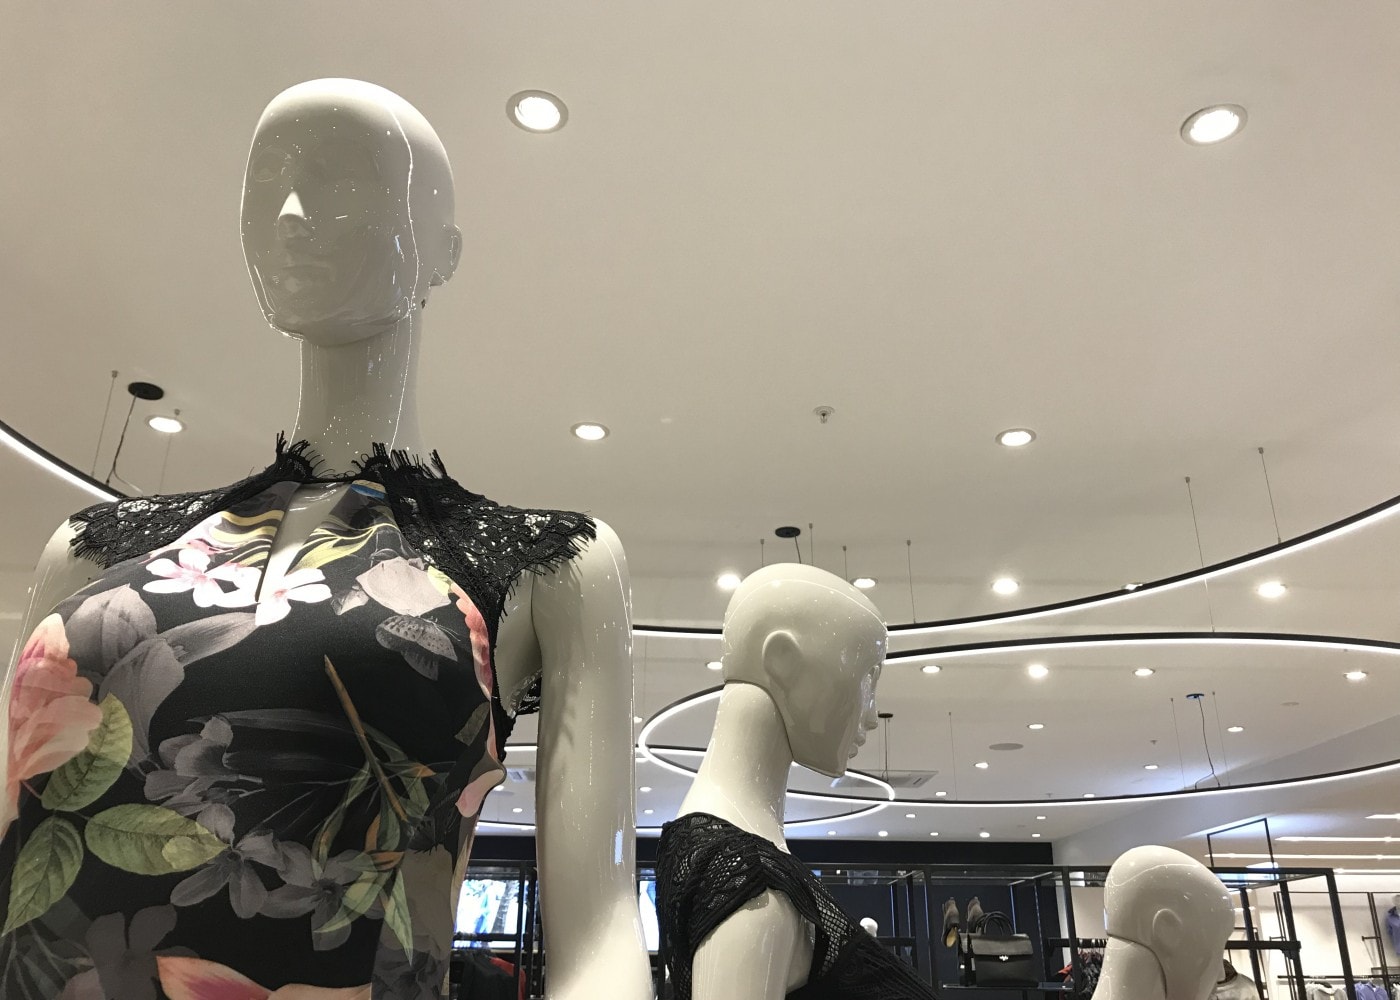 retail lighting design: Next mannequin close up